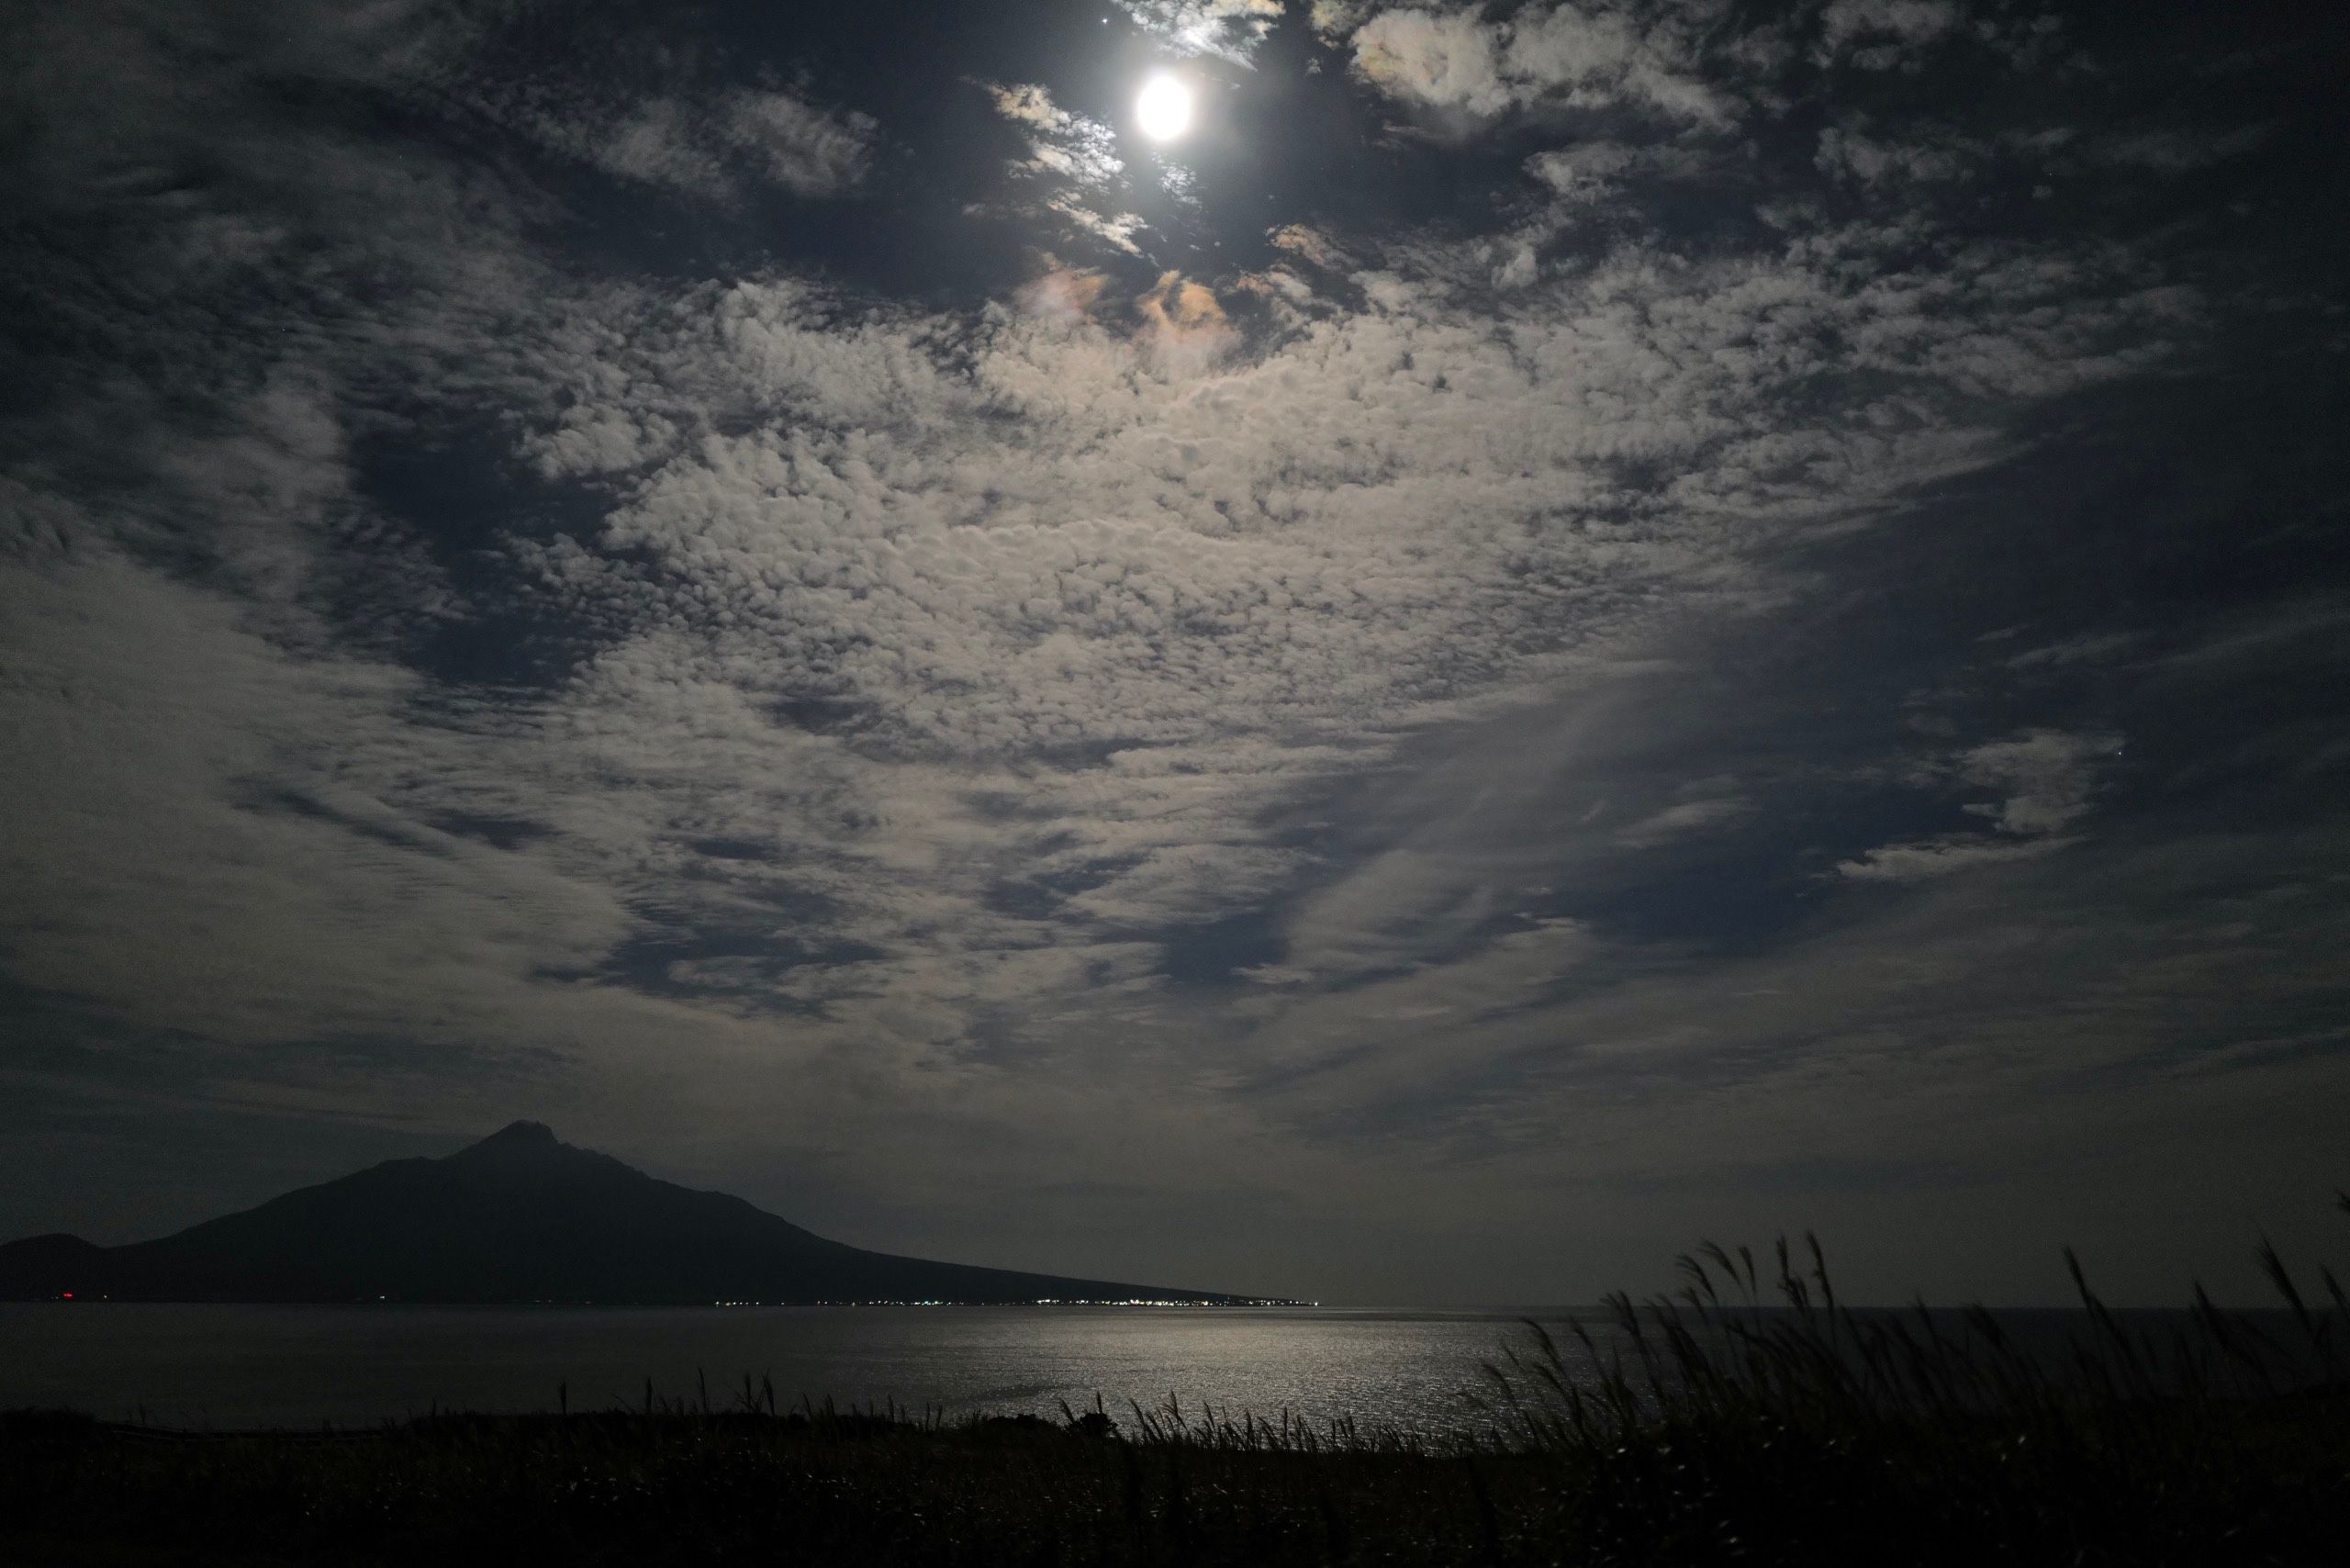 Mount Rishiri in the moonlight, as seen from across the Rebun Strait